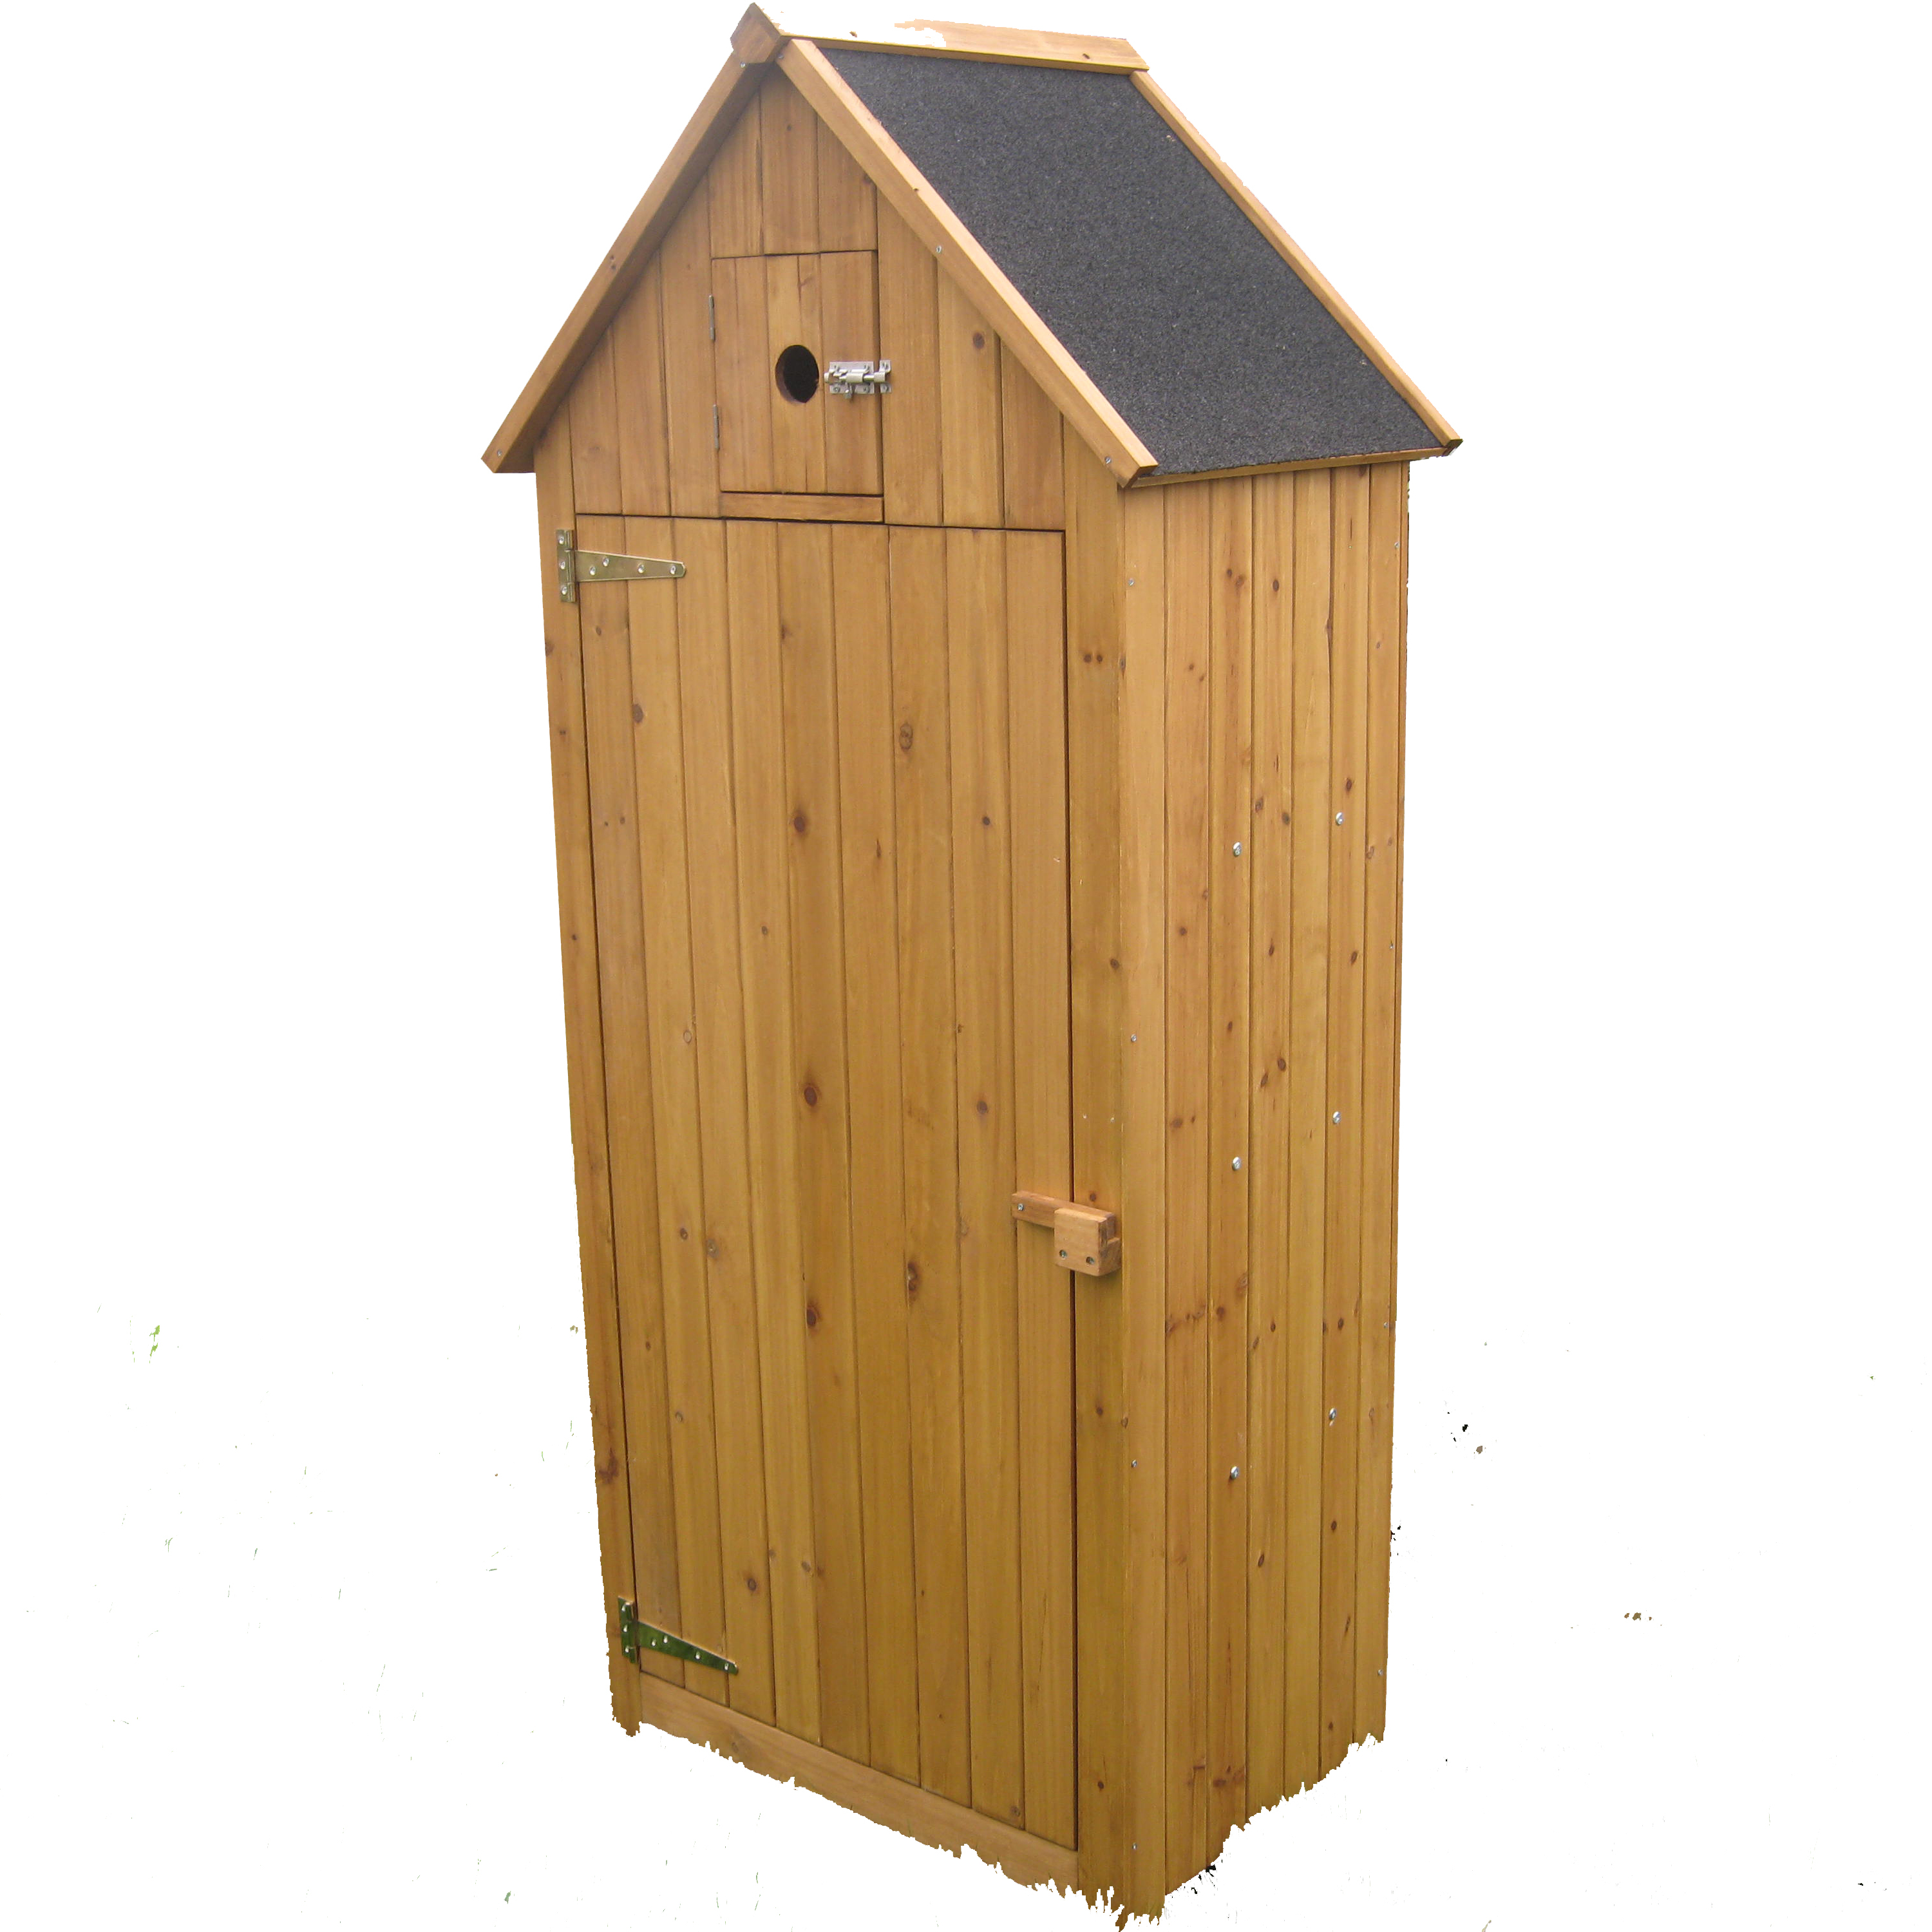 Hight-quality waterproof wooden lawn mower robot garage shelter outdoor garden tool cabinet Storage Cabinet Lockers